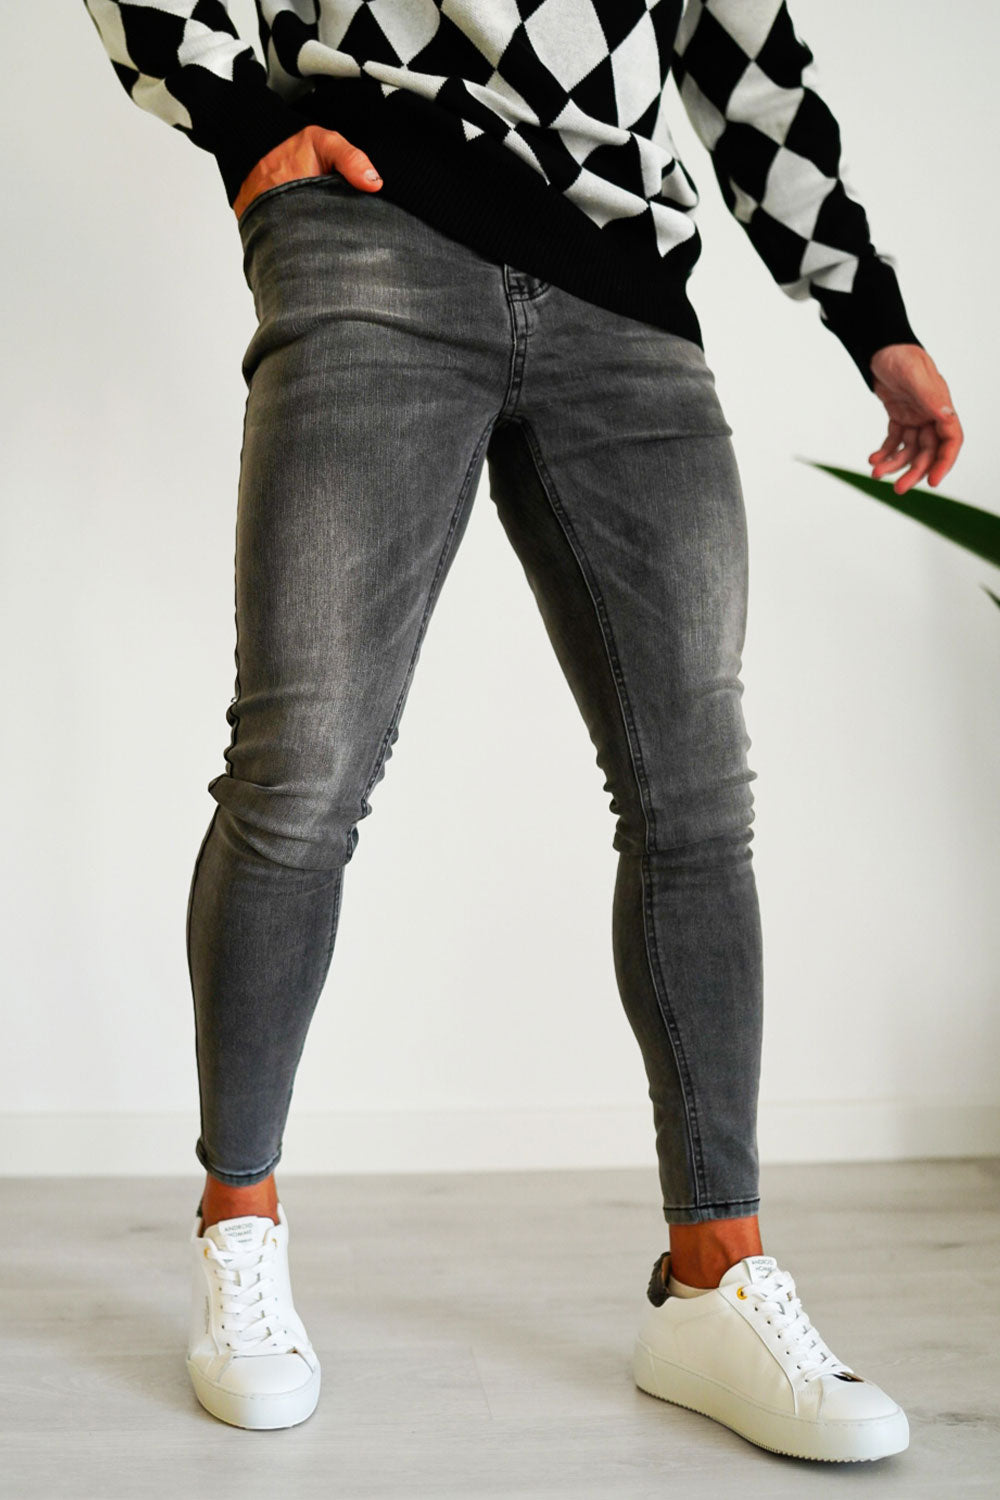 Men's Zipper Skinny Jeans -Gray & Washed